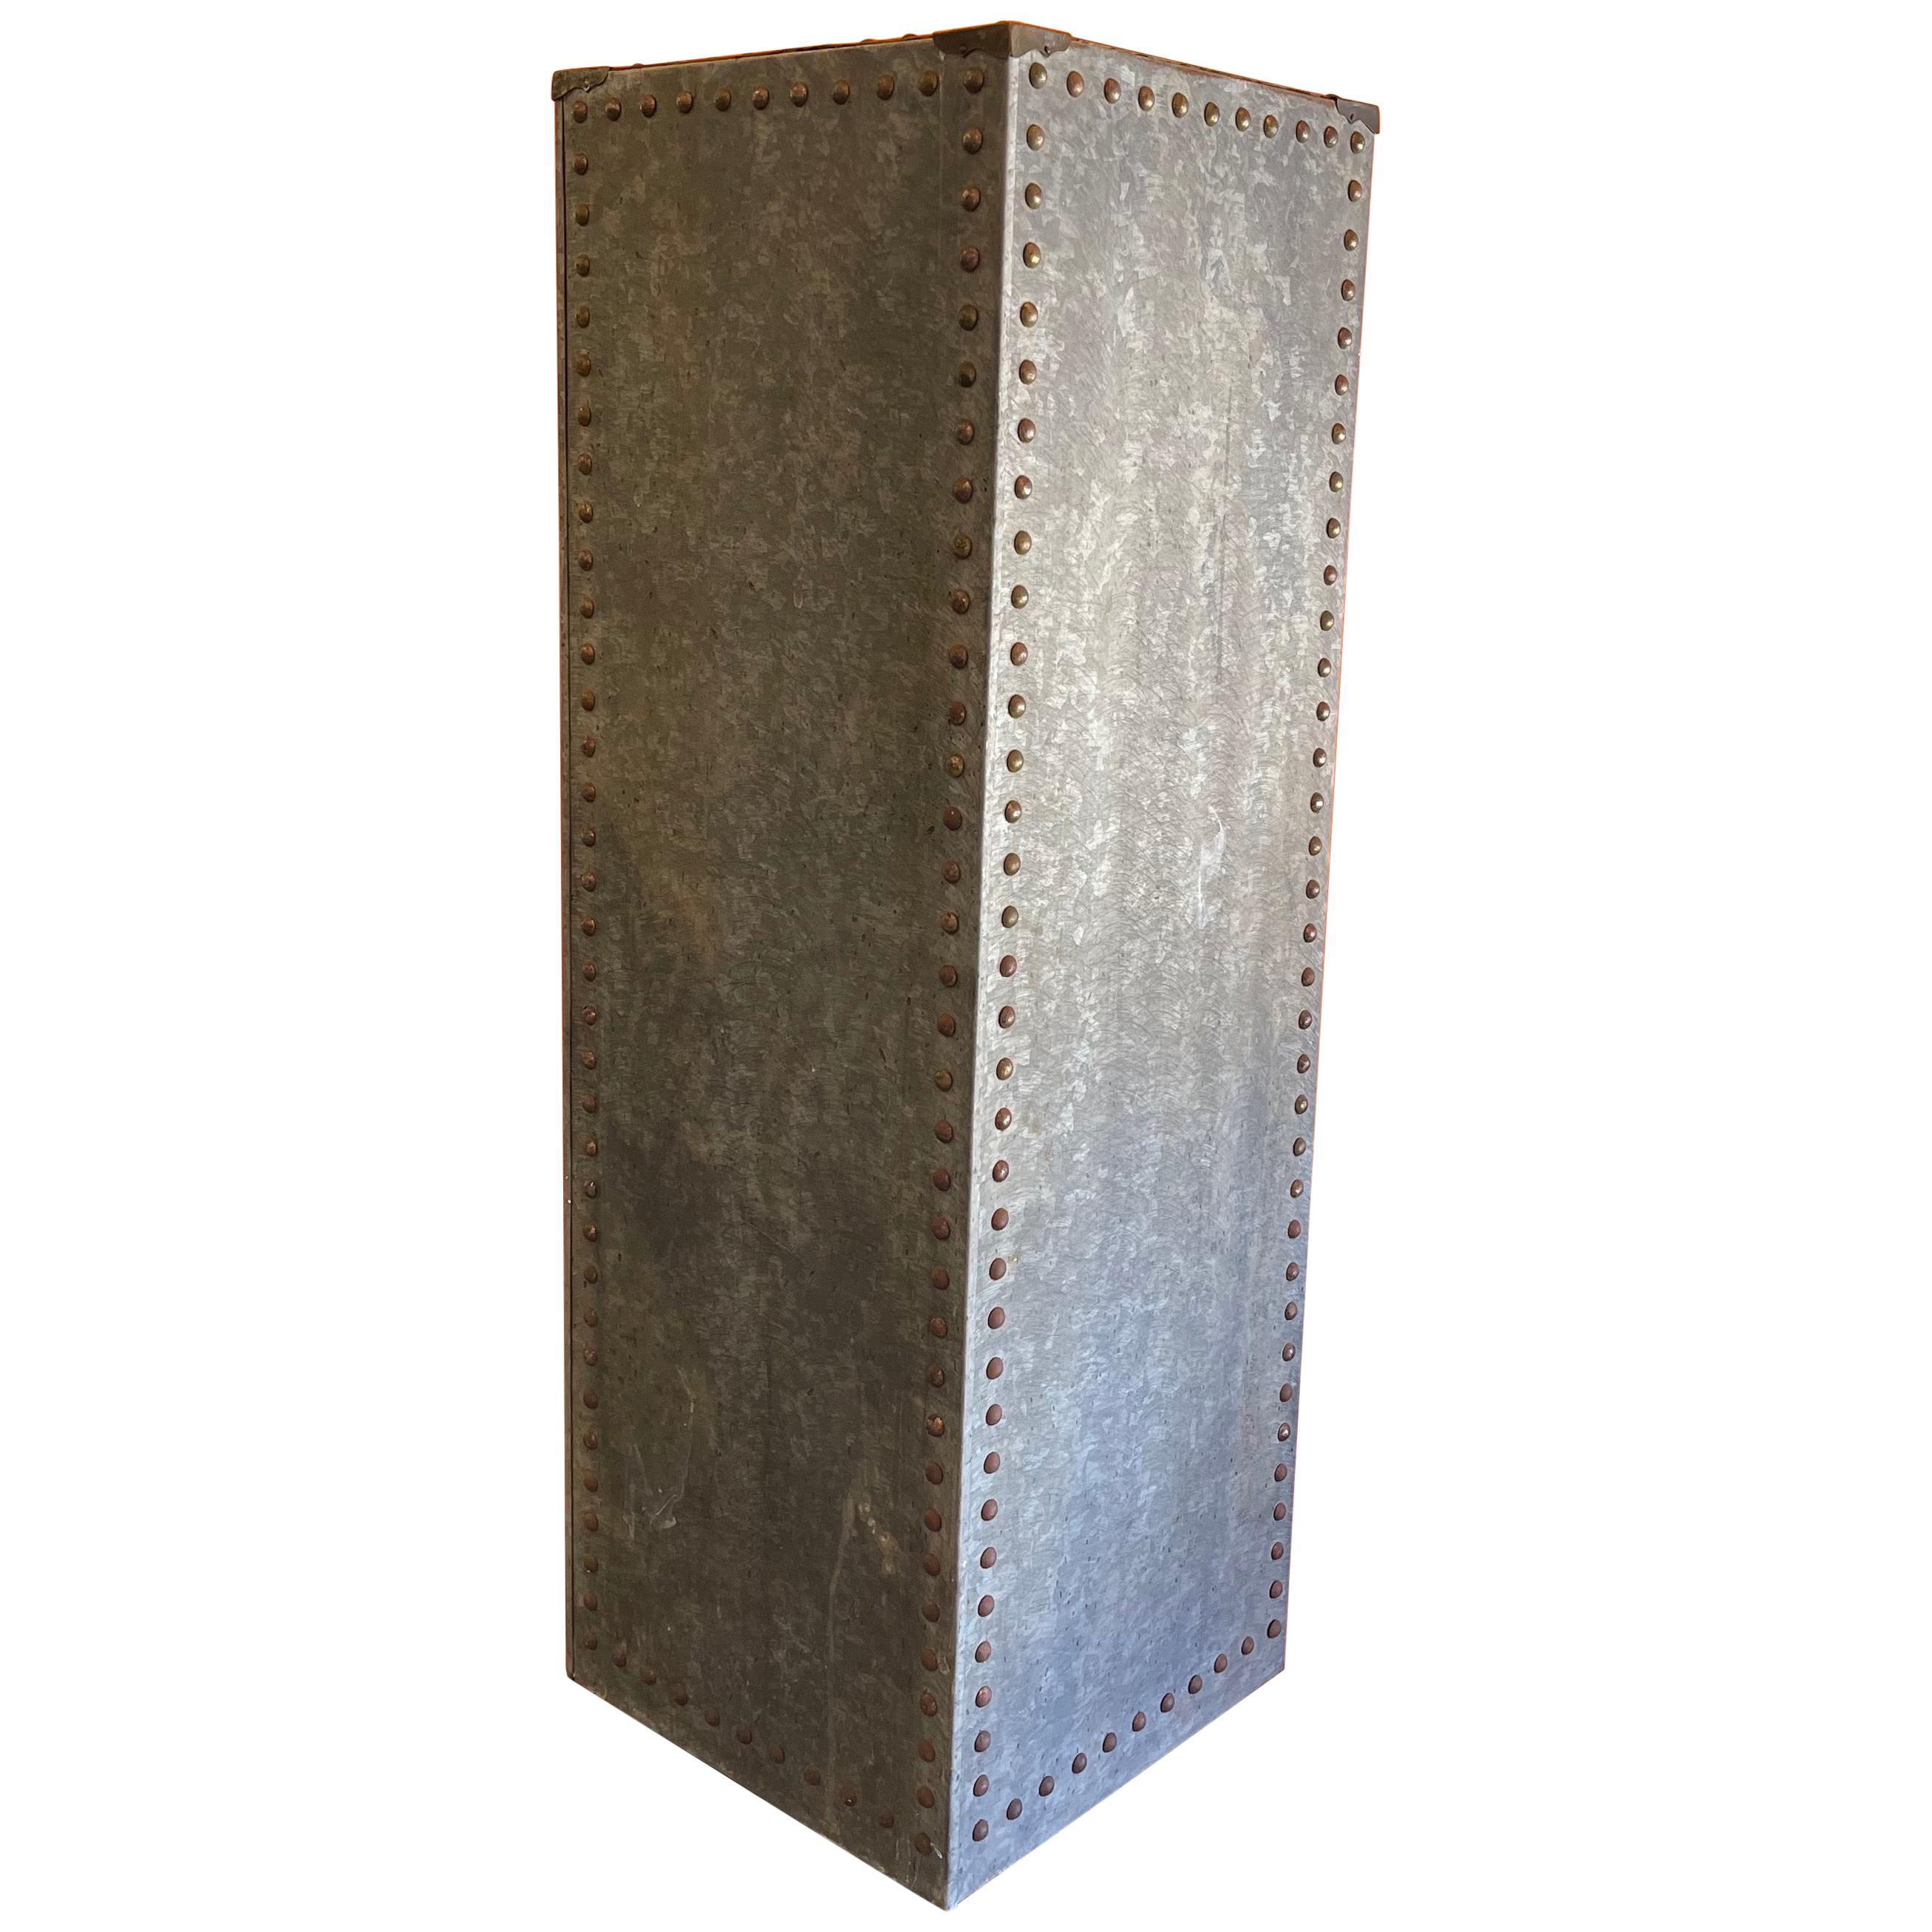 Rustic Galvanized Sheet Metal and Rivets Pedestal